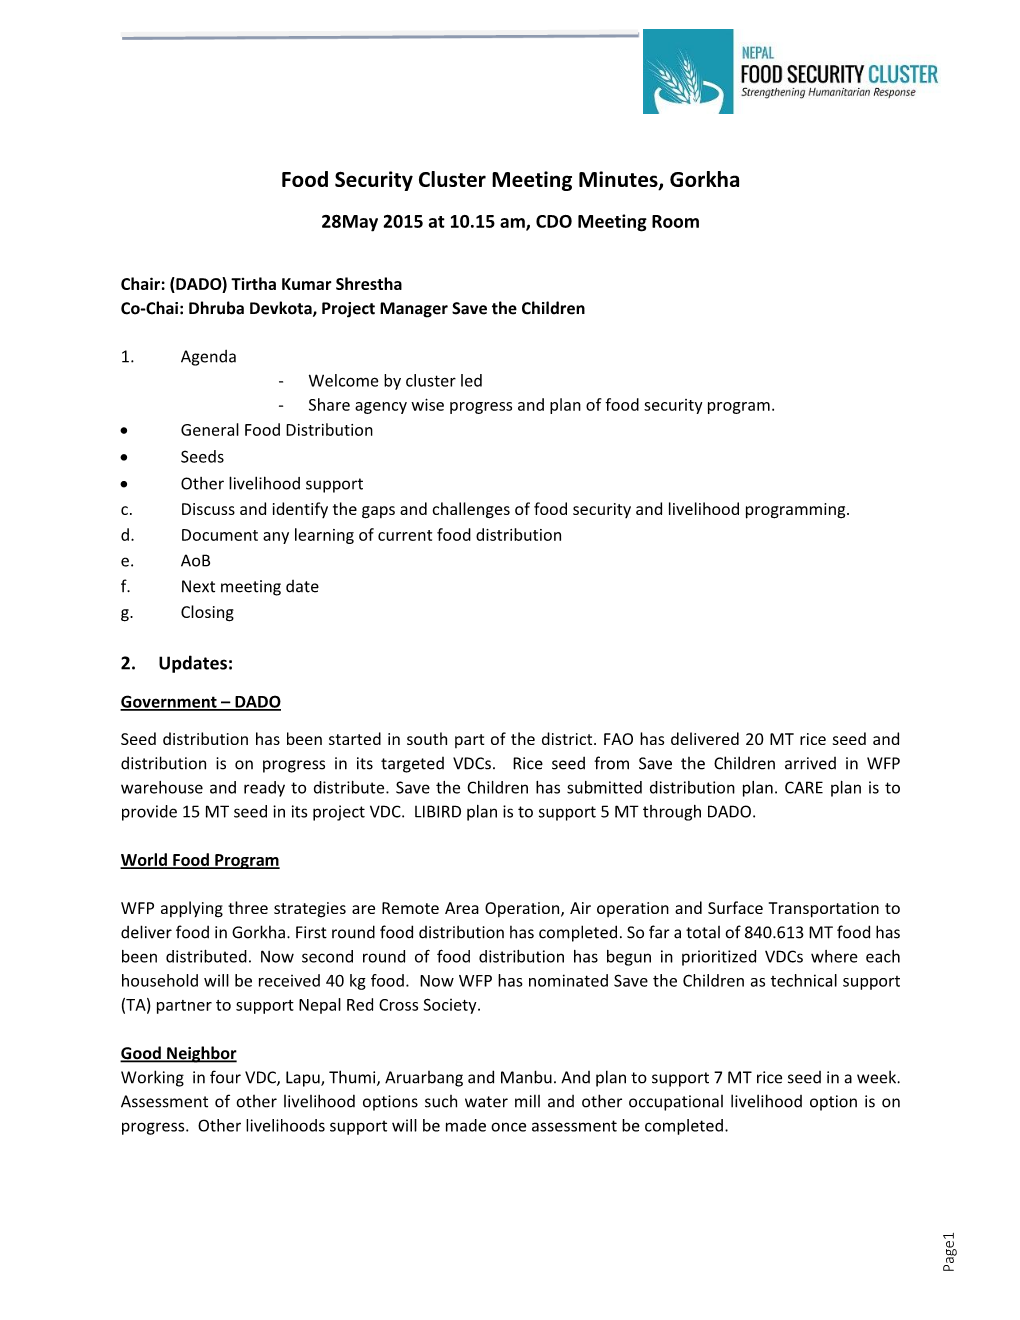 Food Security Cluster Meeting Minutes, Gorkha 28May 2015 at 10.15 Am, CDO Meeting Room